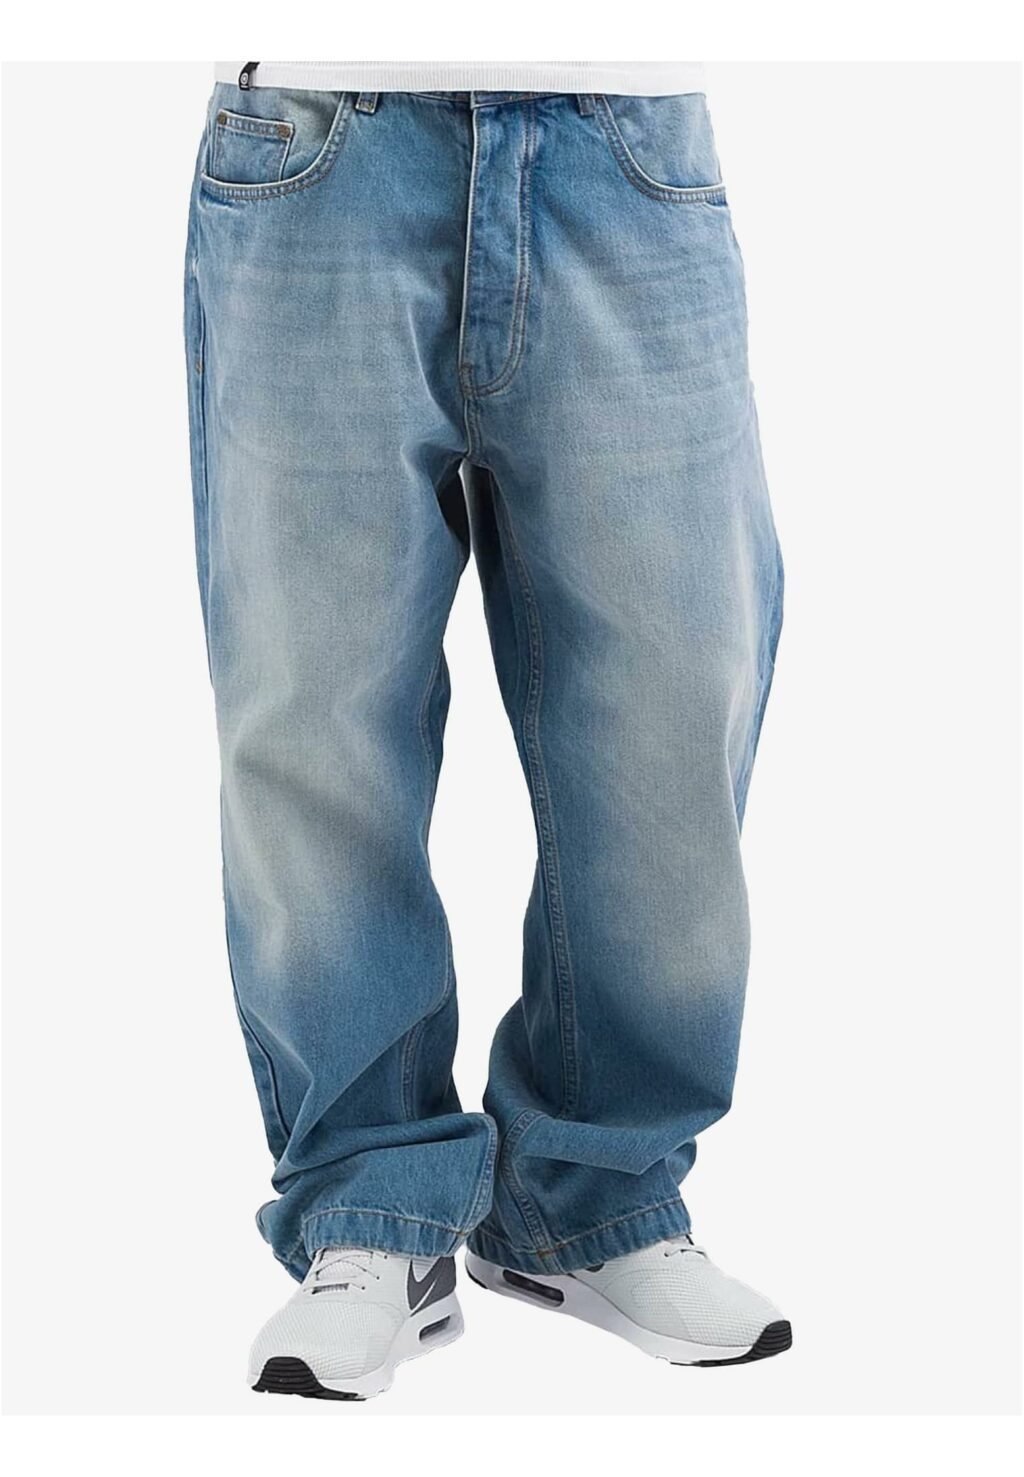 Ecko Unltd. Fat Bro Baggy Jeans light blue denim W34 ECKOJS1001